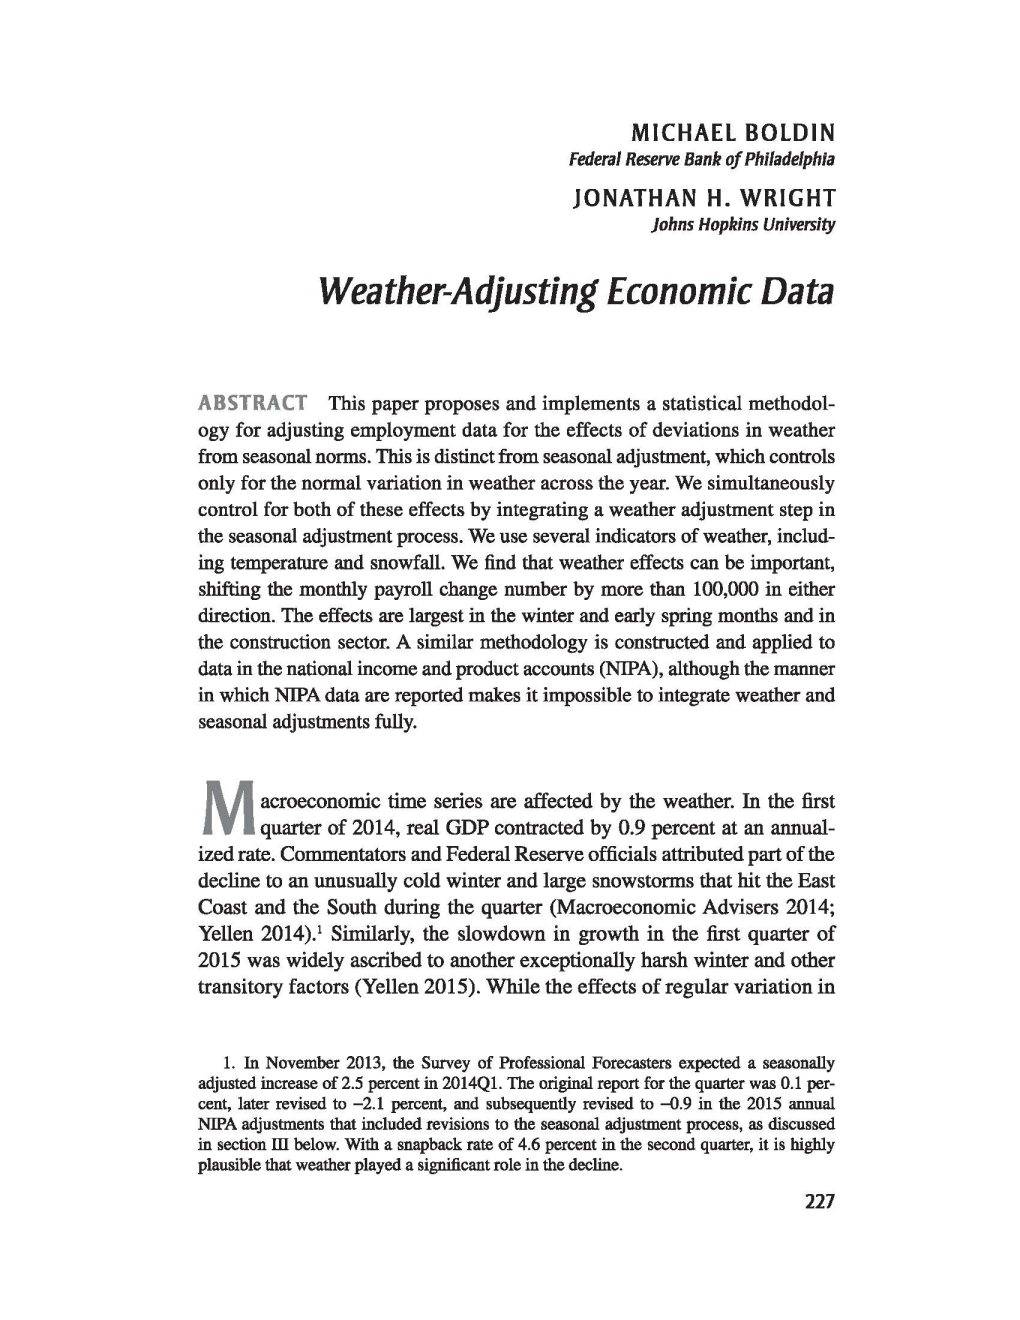 Weather-Adjusting Economic Data